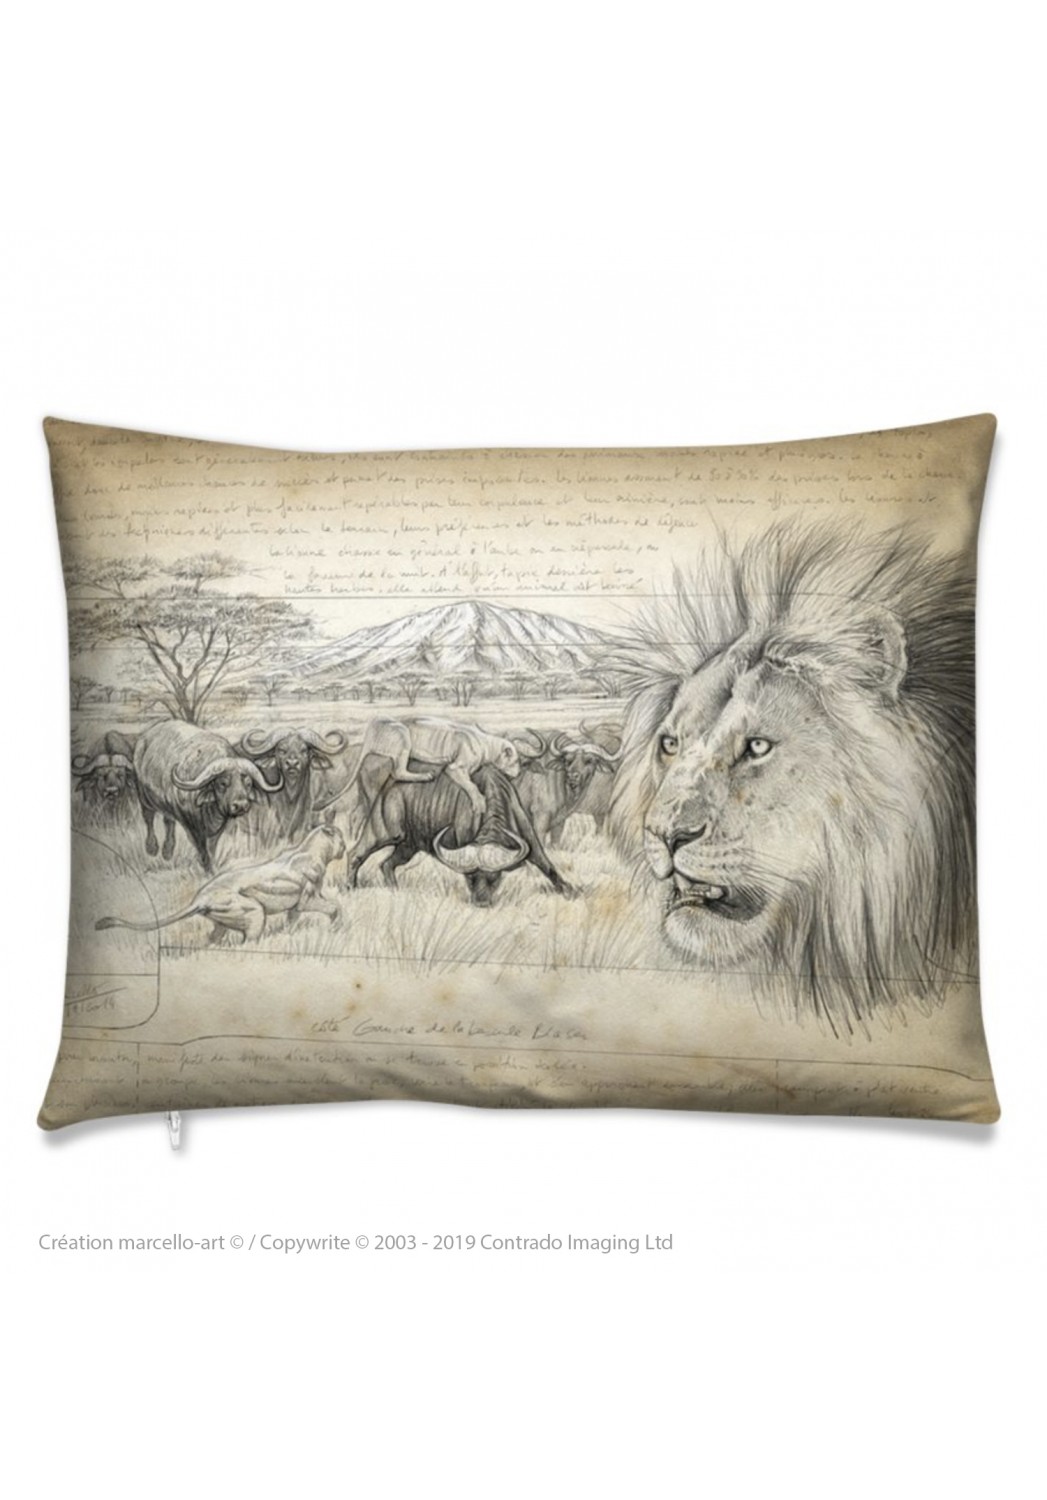 Marcello-art: Fashion accessory Cushion 275 lion engraving